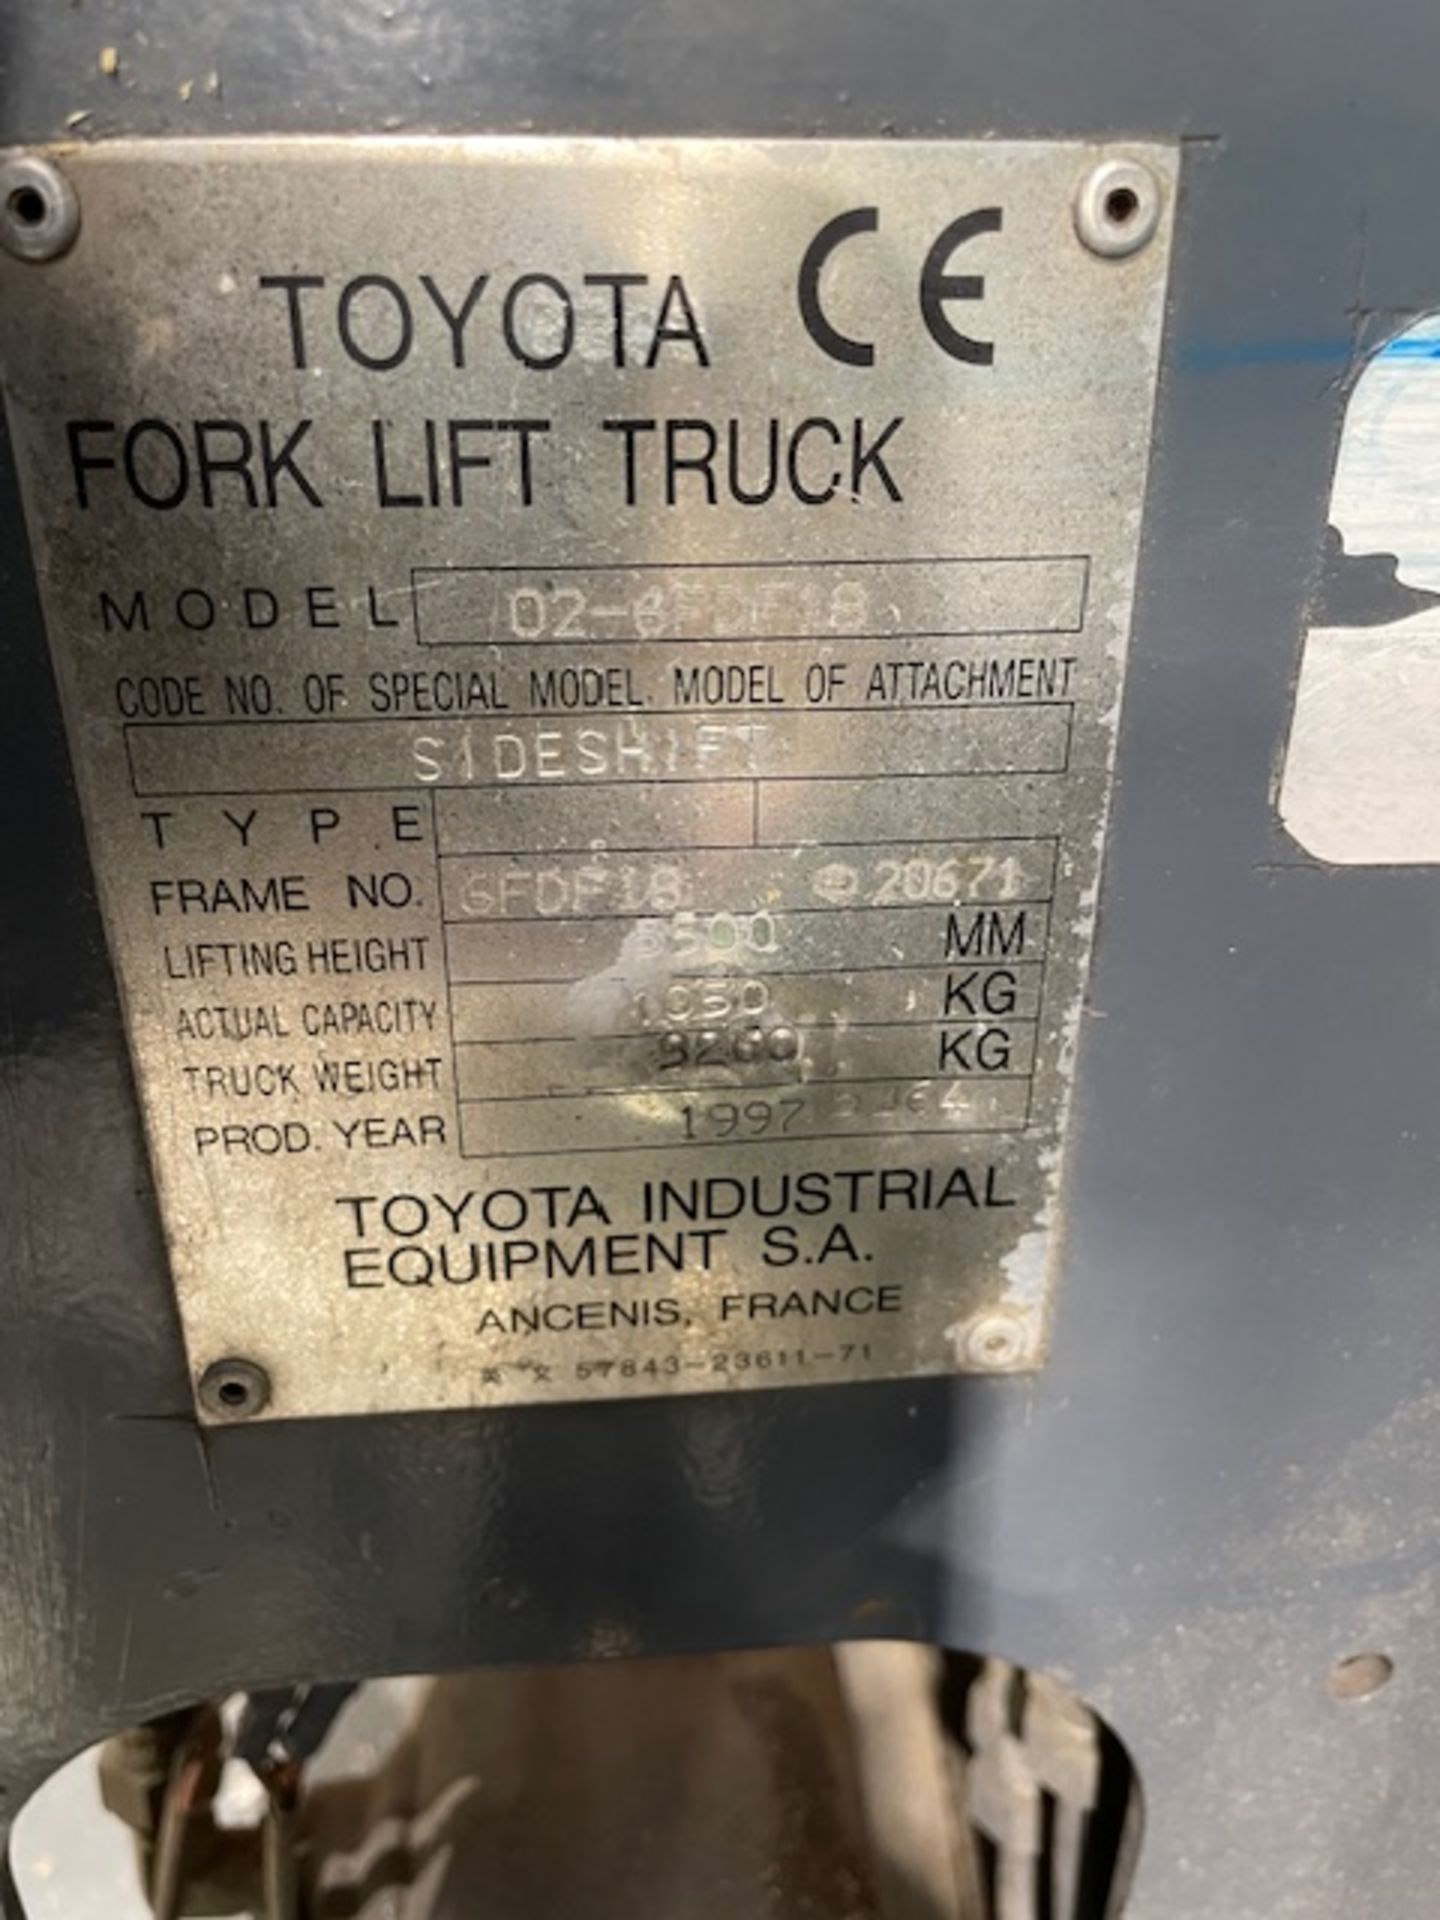 Toyota Model 026 6FDF18 Diesel Forklift Truck (1997), Serial Number 12978490/CMC60 Triple Mast - Image 5 of 6